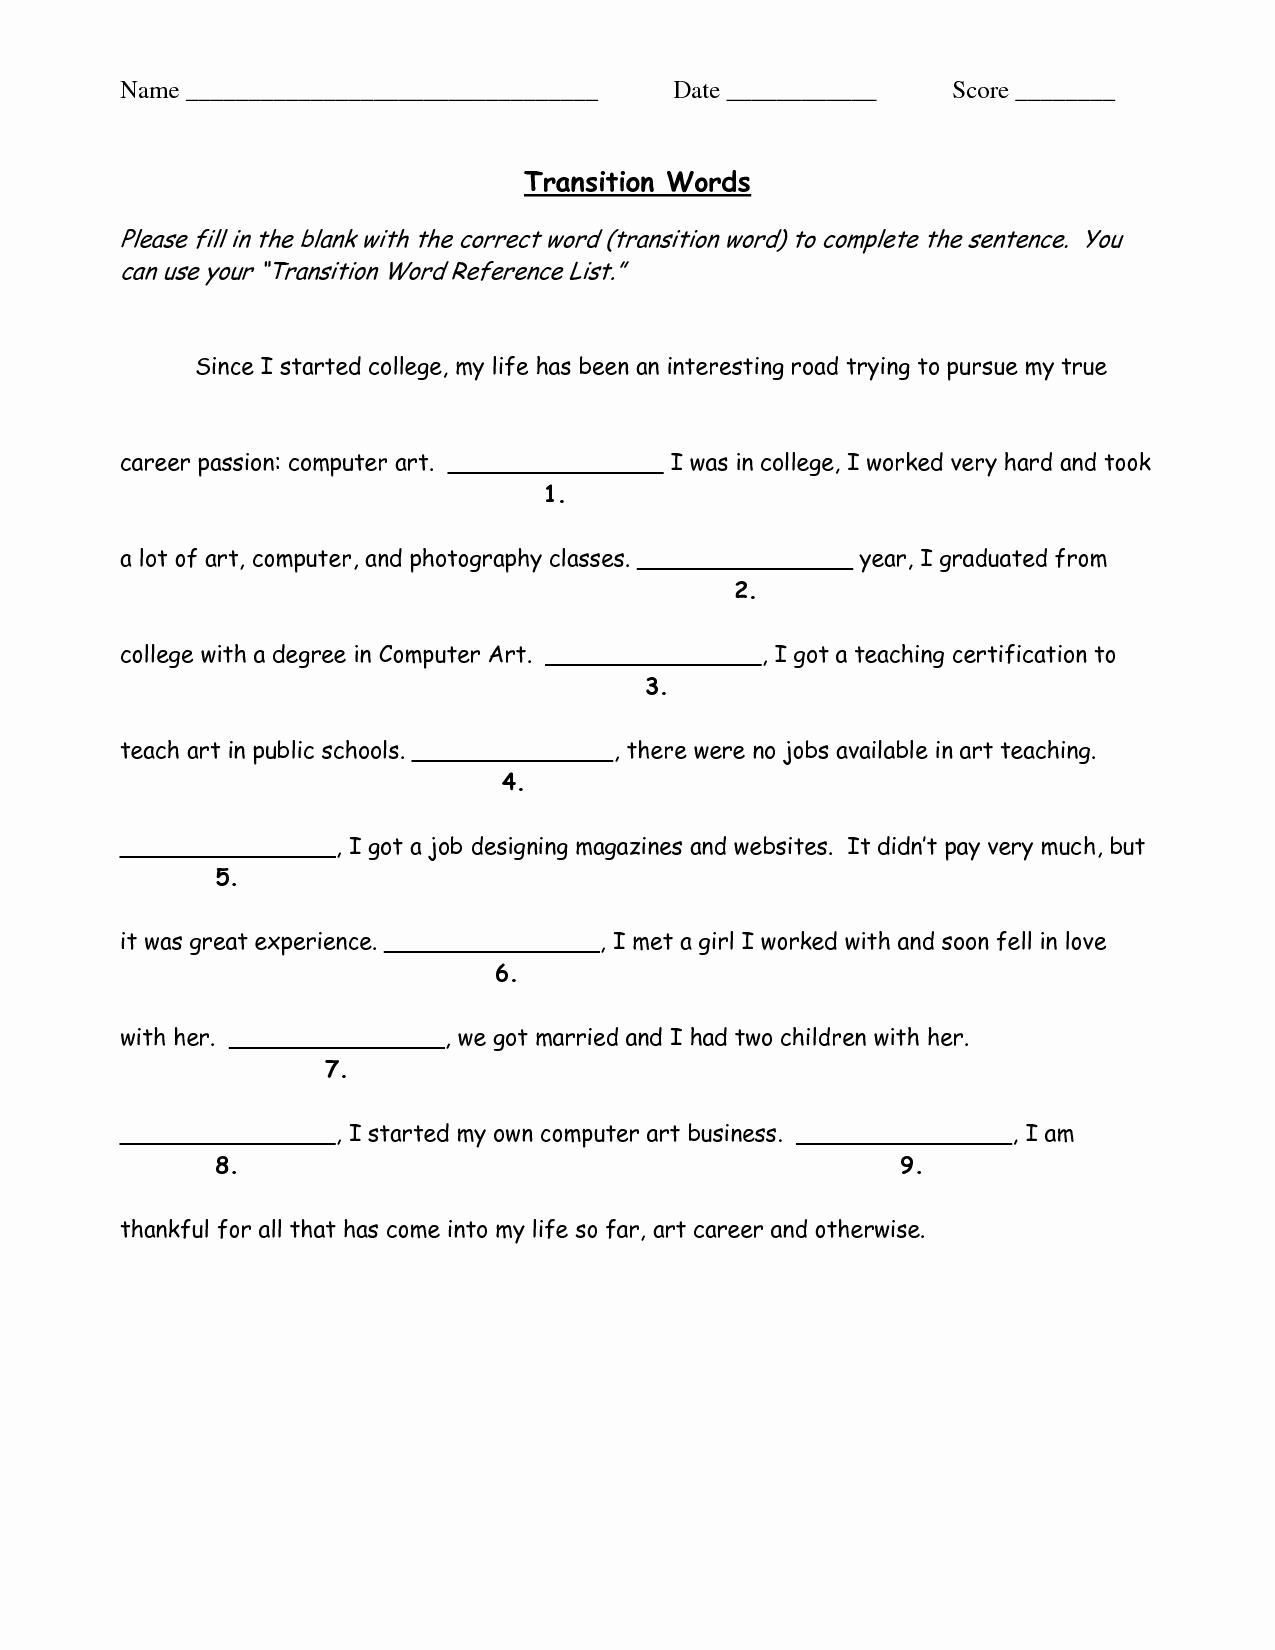 Transition Words Practice Worksheet Lovely 31 Transition Words Worksheet High School Worksheet